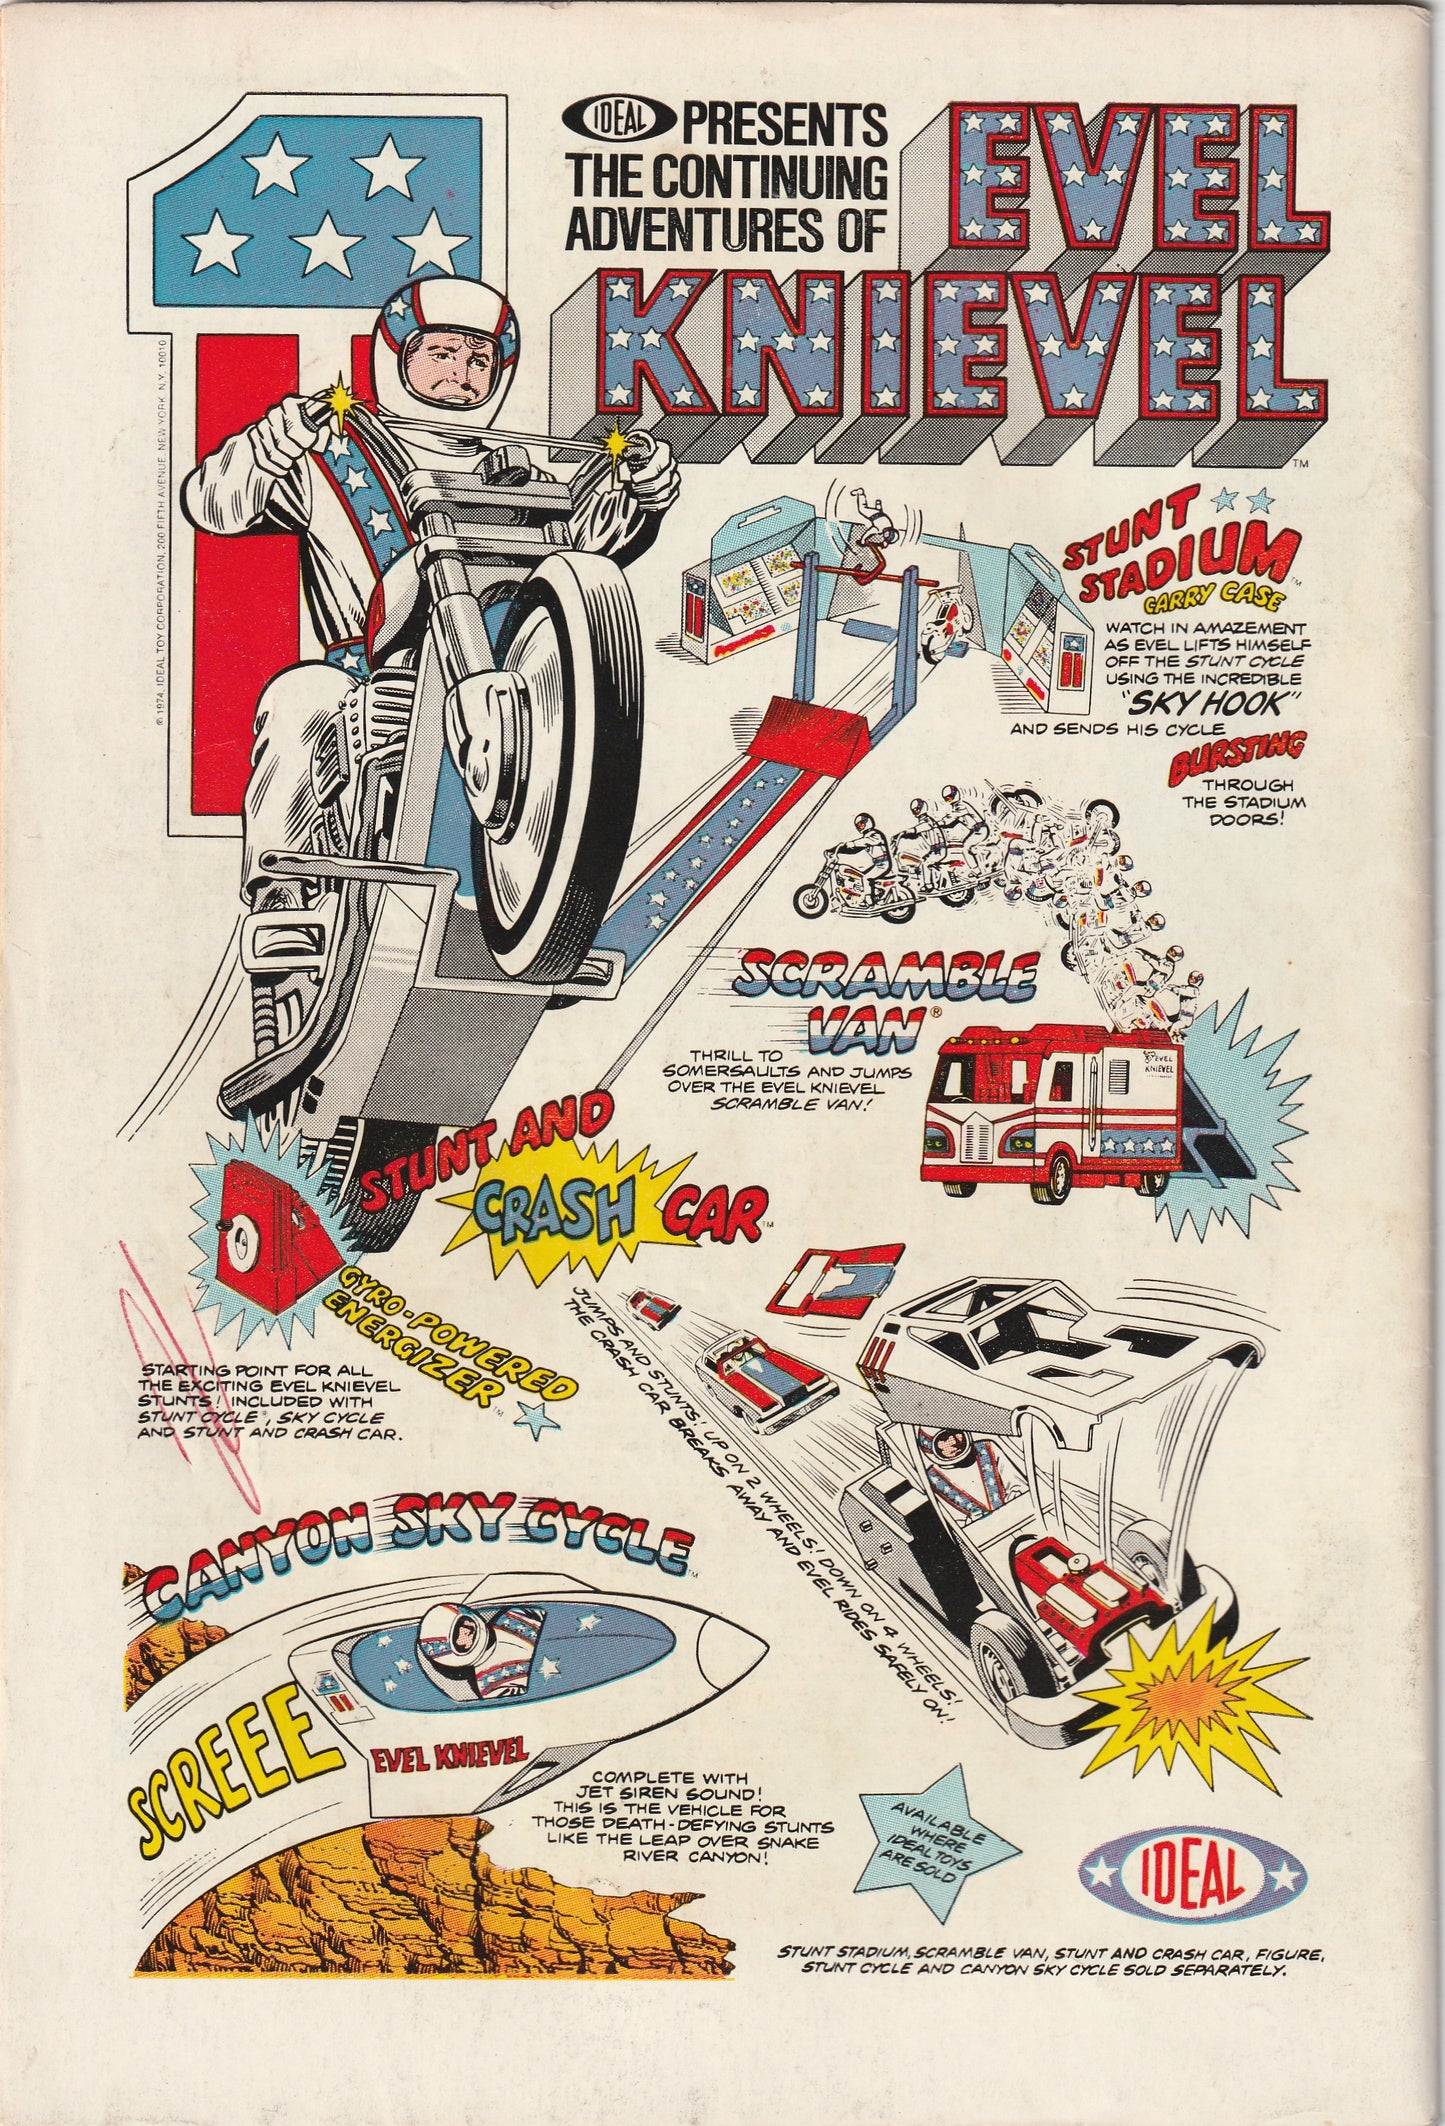 Marvel's Greatest Comics #54 (1975)